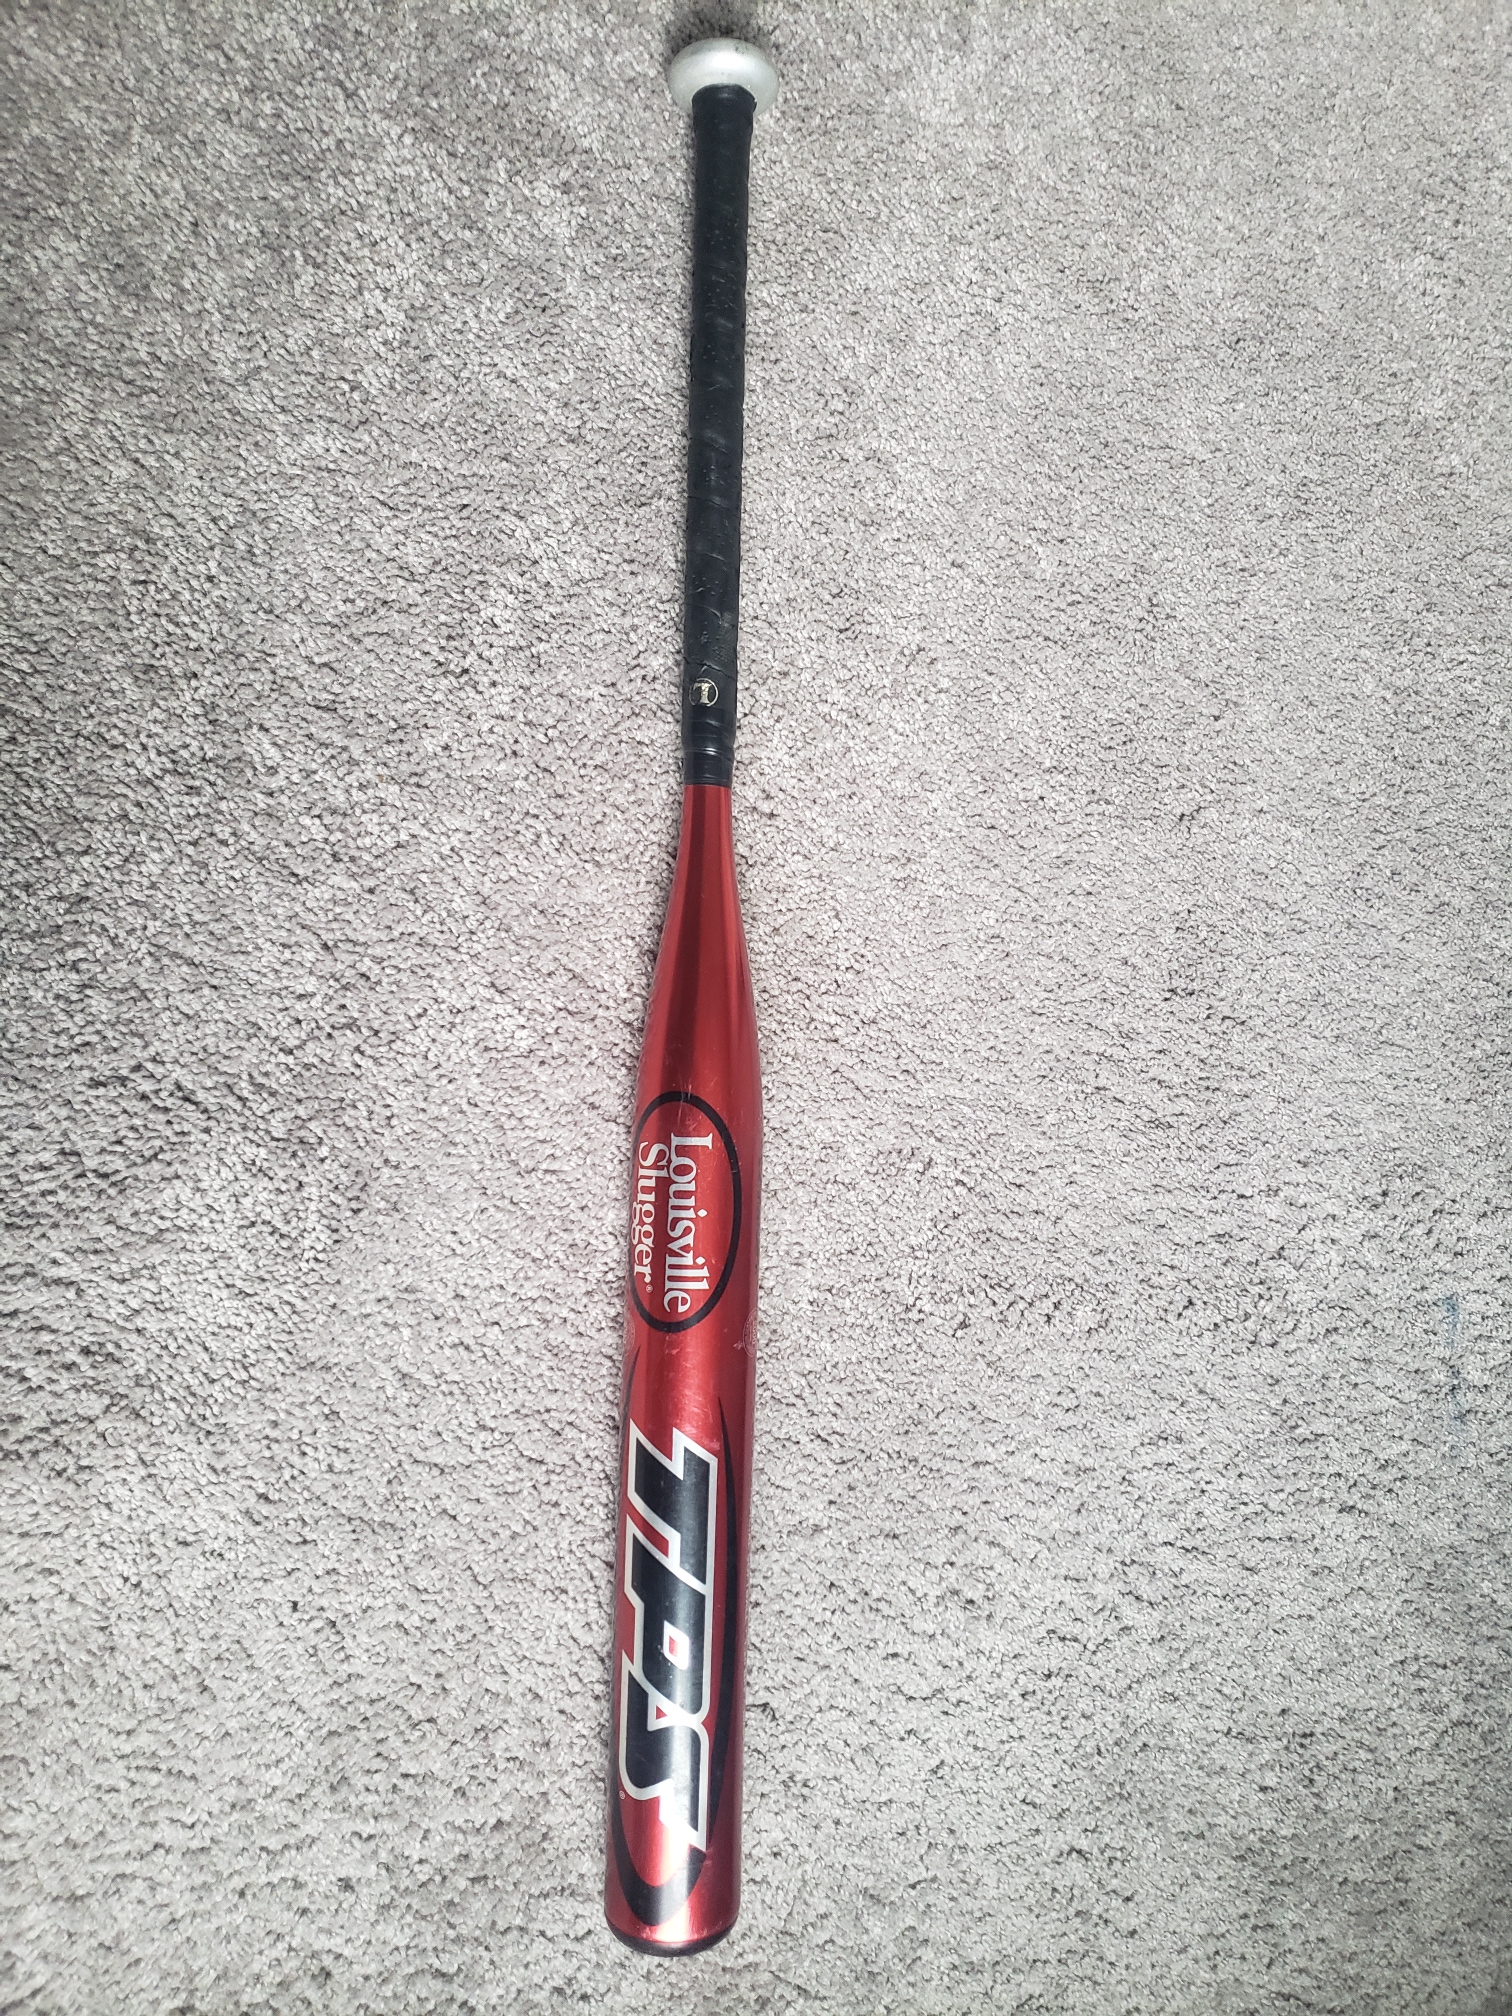 Used Louisville Slugger Bat (-10) 21 oz 31"